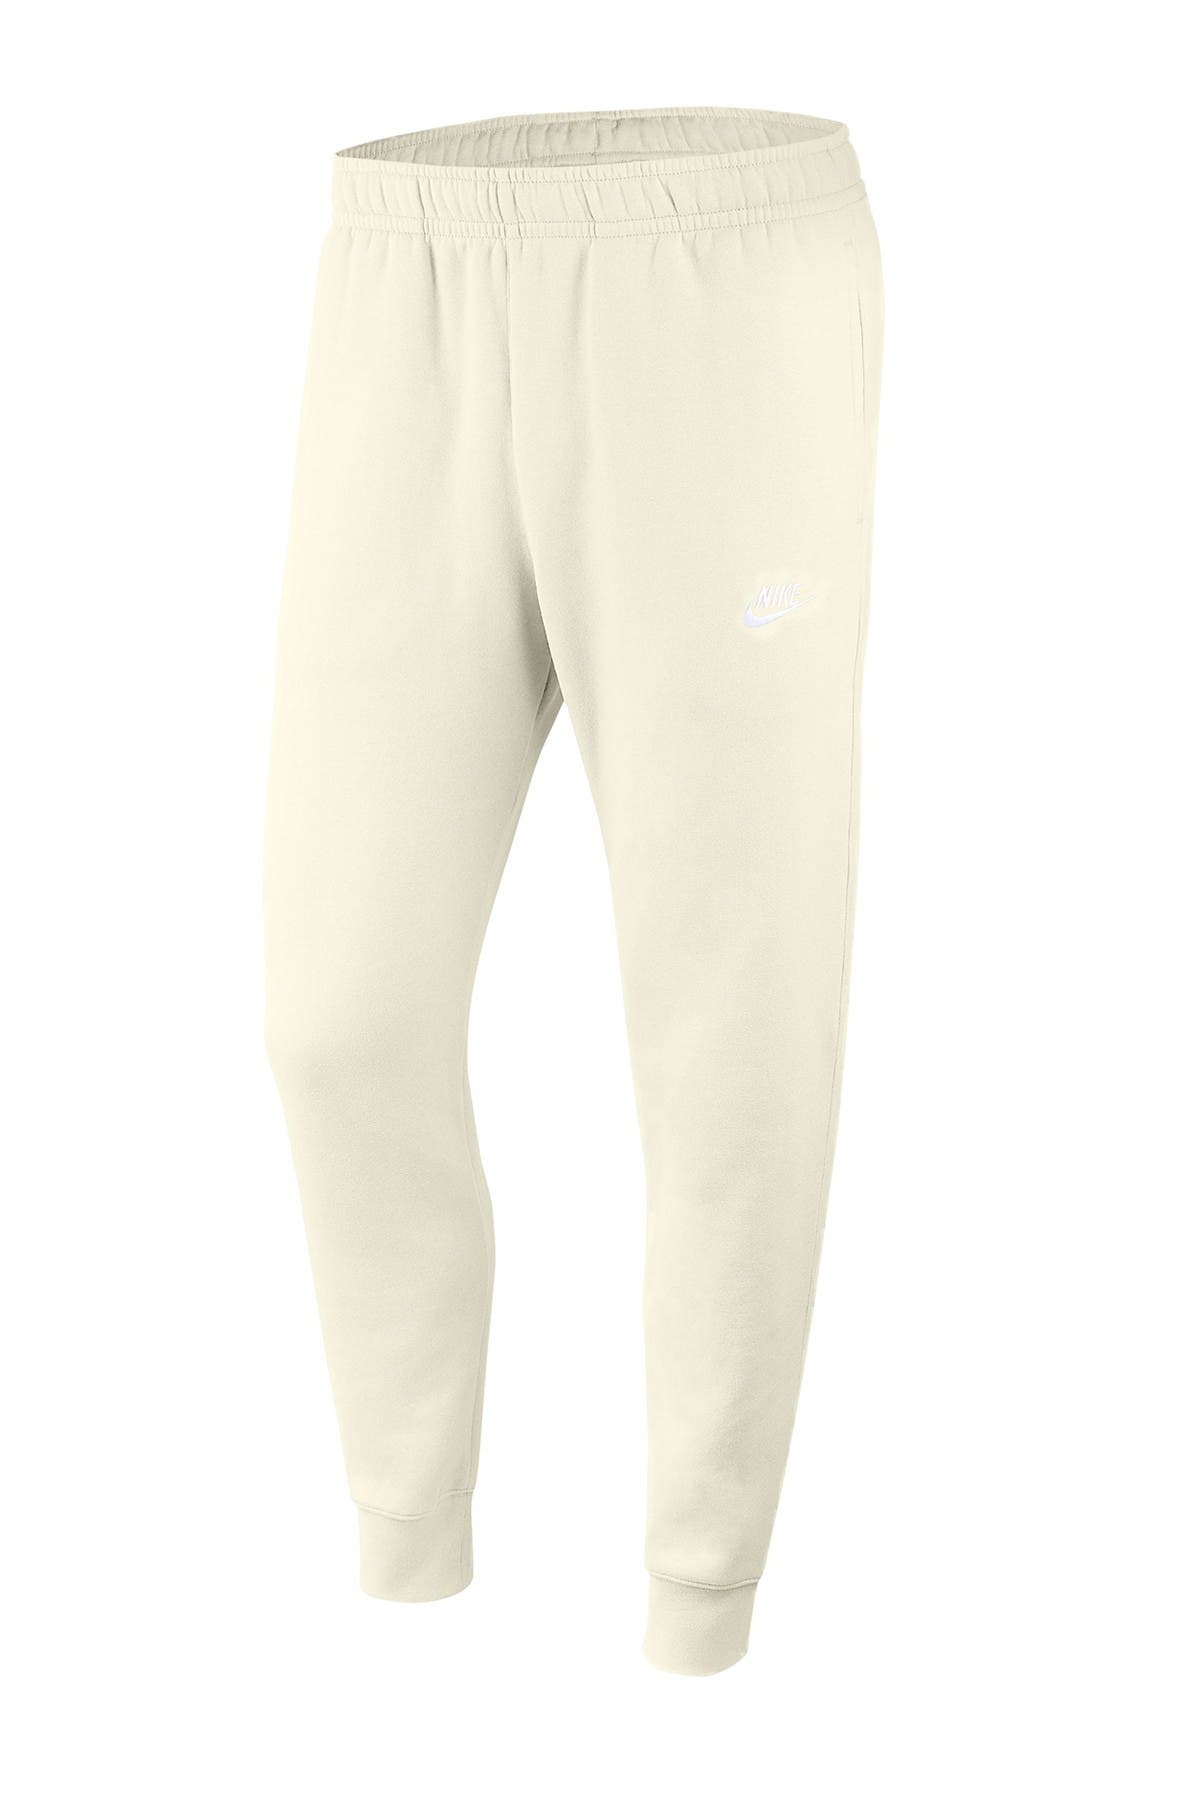 Nike Sportswear Men's Club Pocket Fleece Joggers In Sail/white | ModeSens